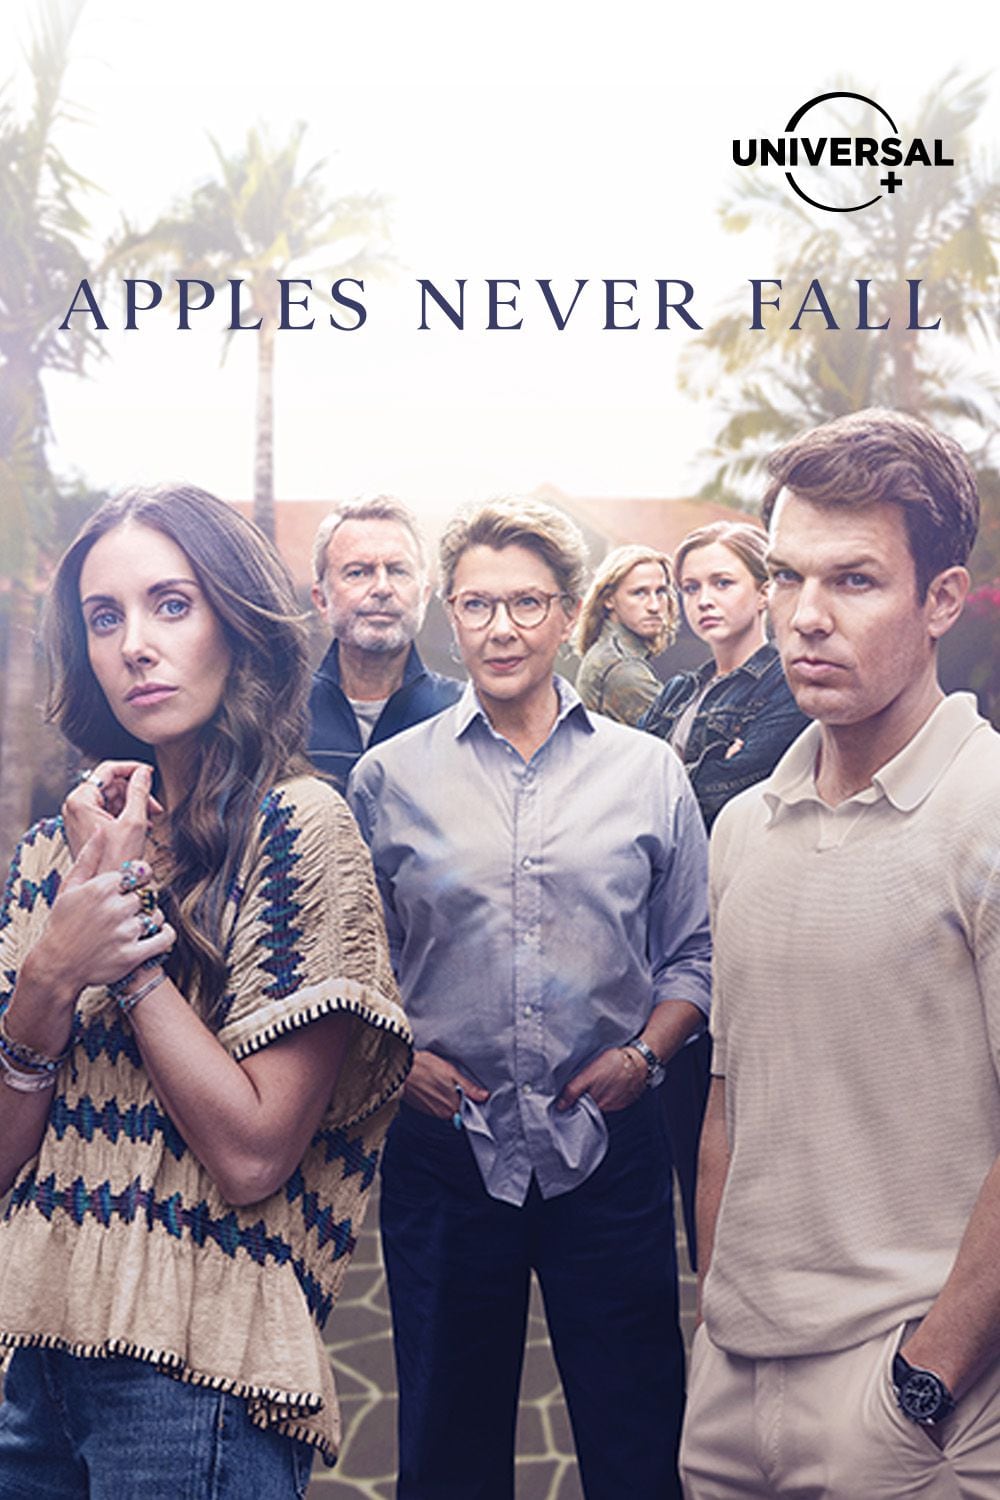 Serie Apples Never Fall se acaba de estrenar en Universal